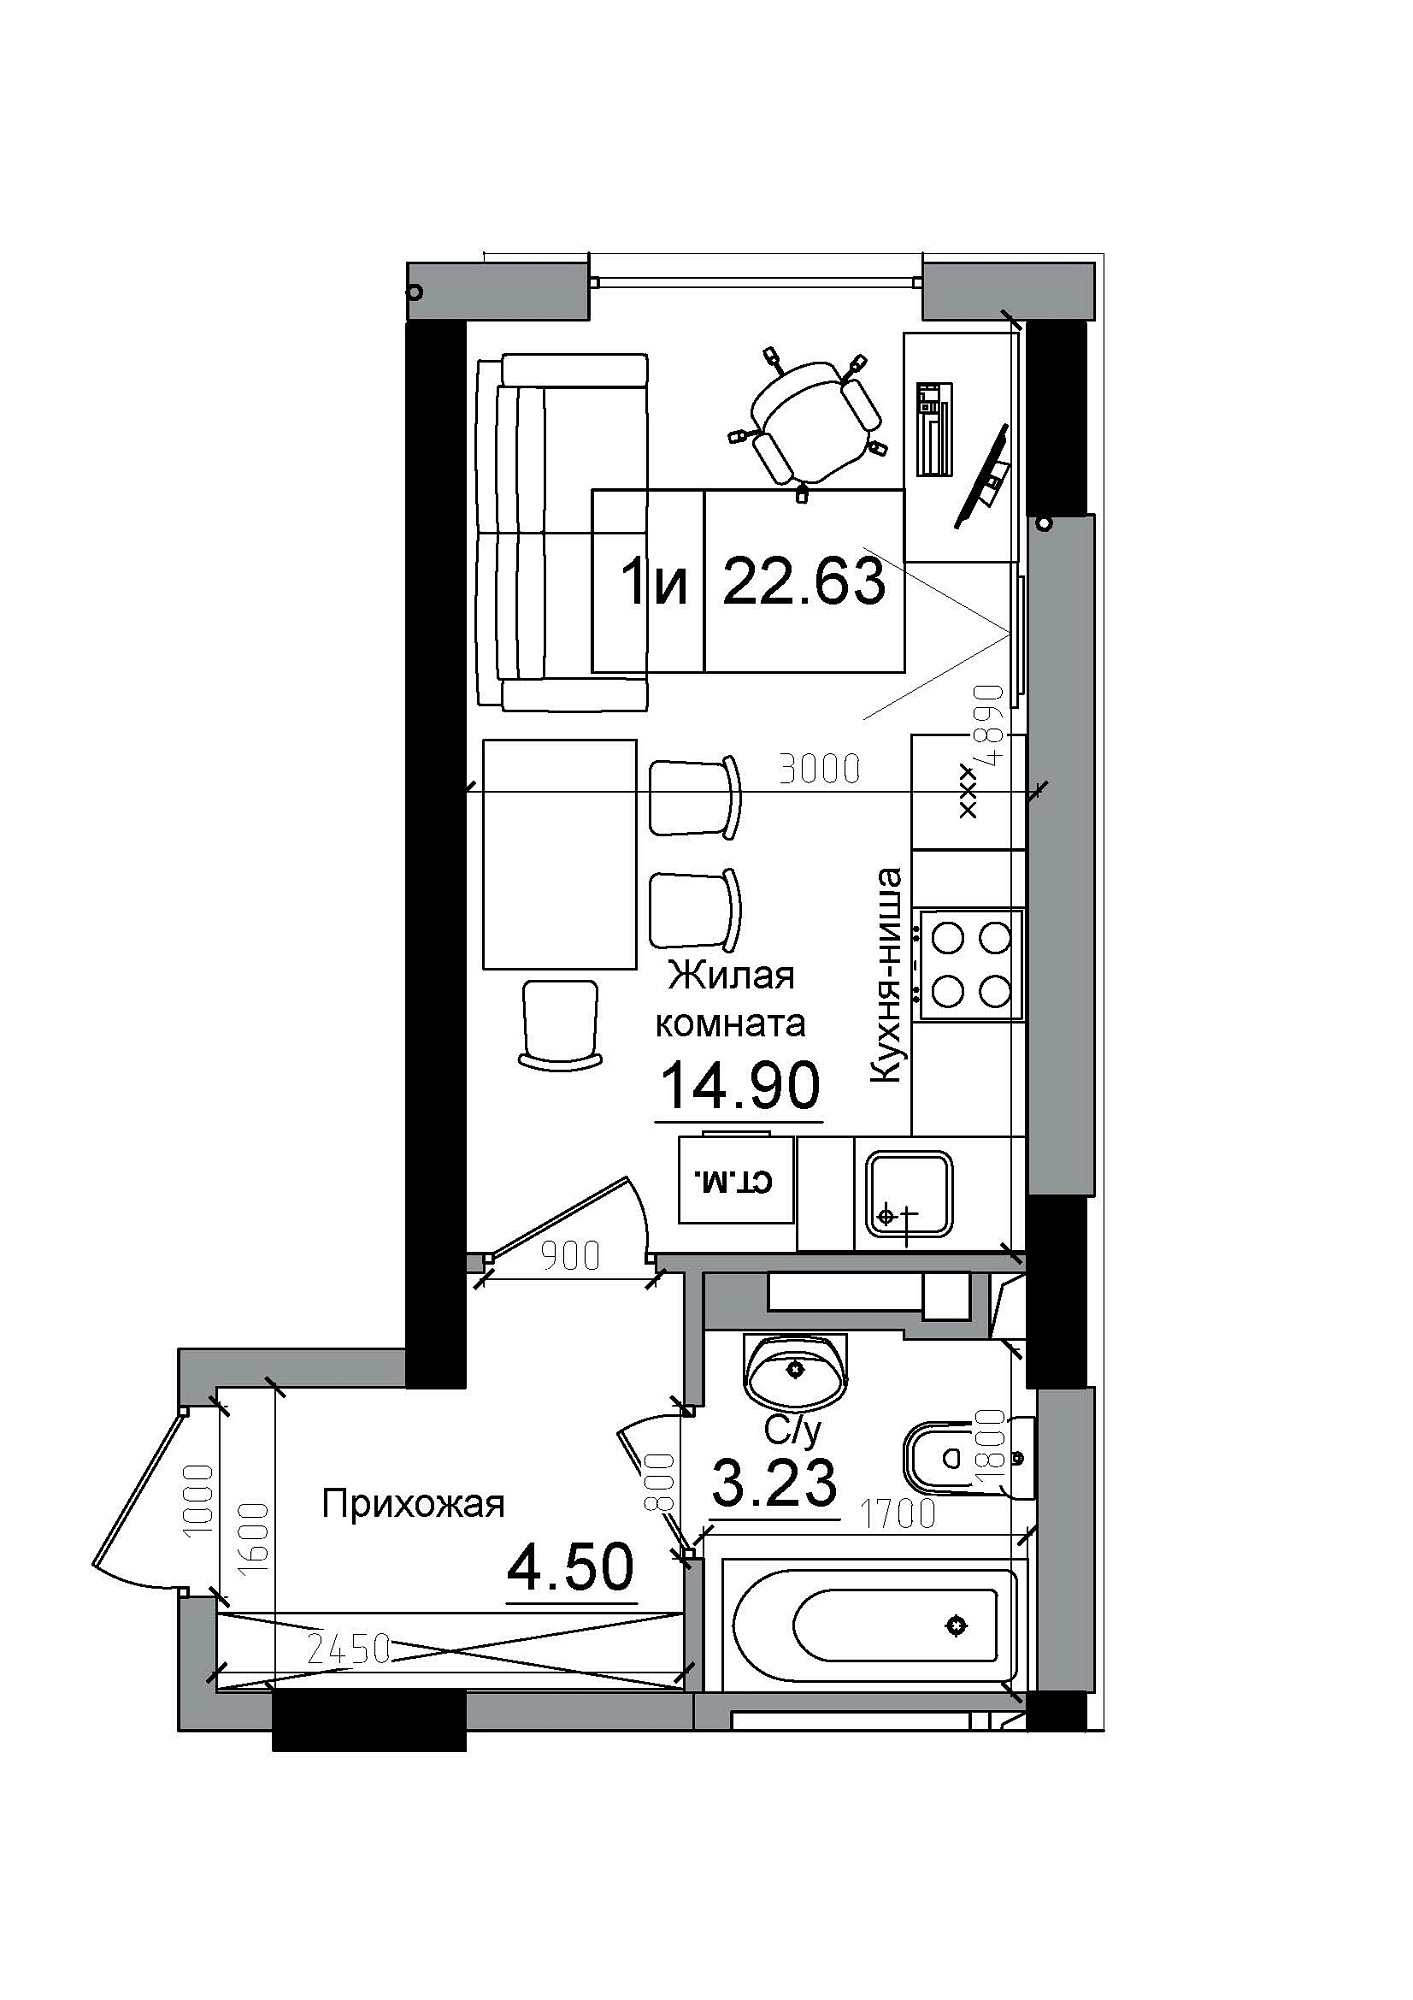 Планировка Smart-квартира площей 22.63м2, AB-12-05/00011.